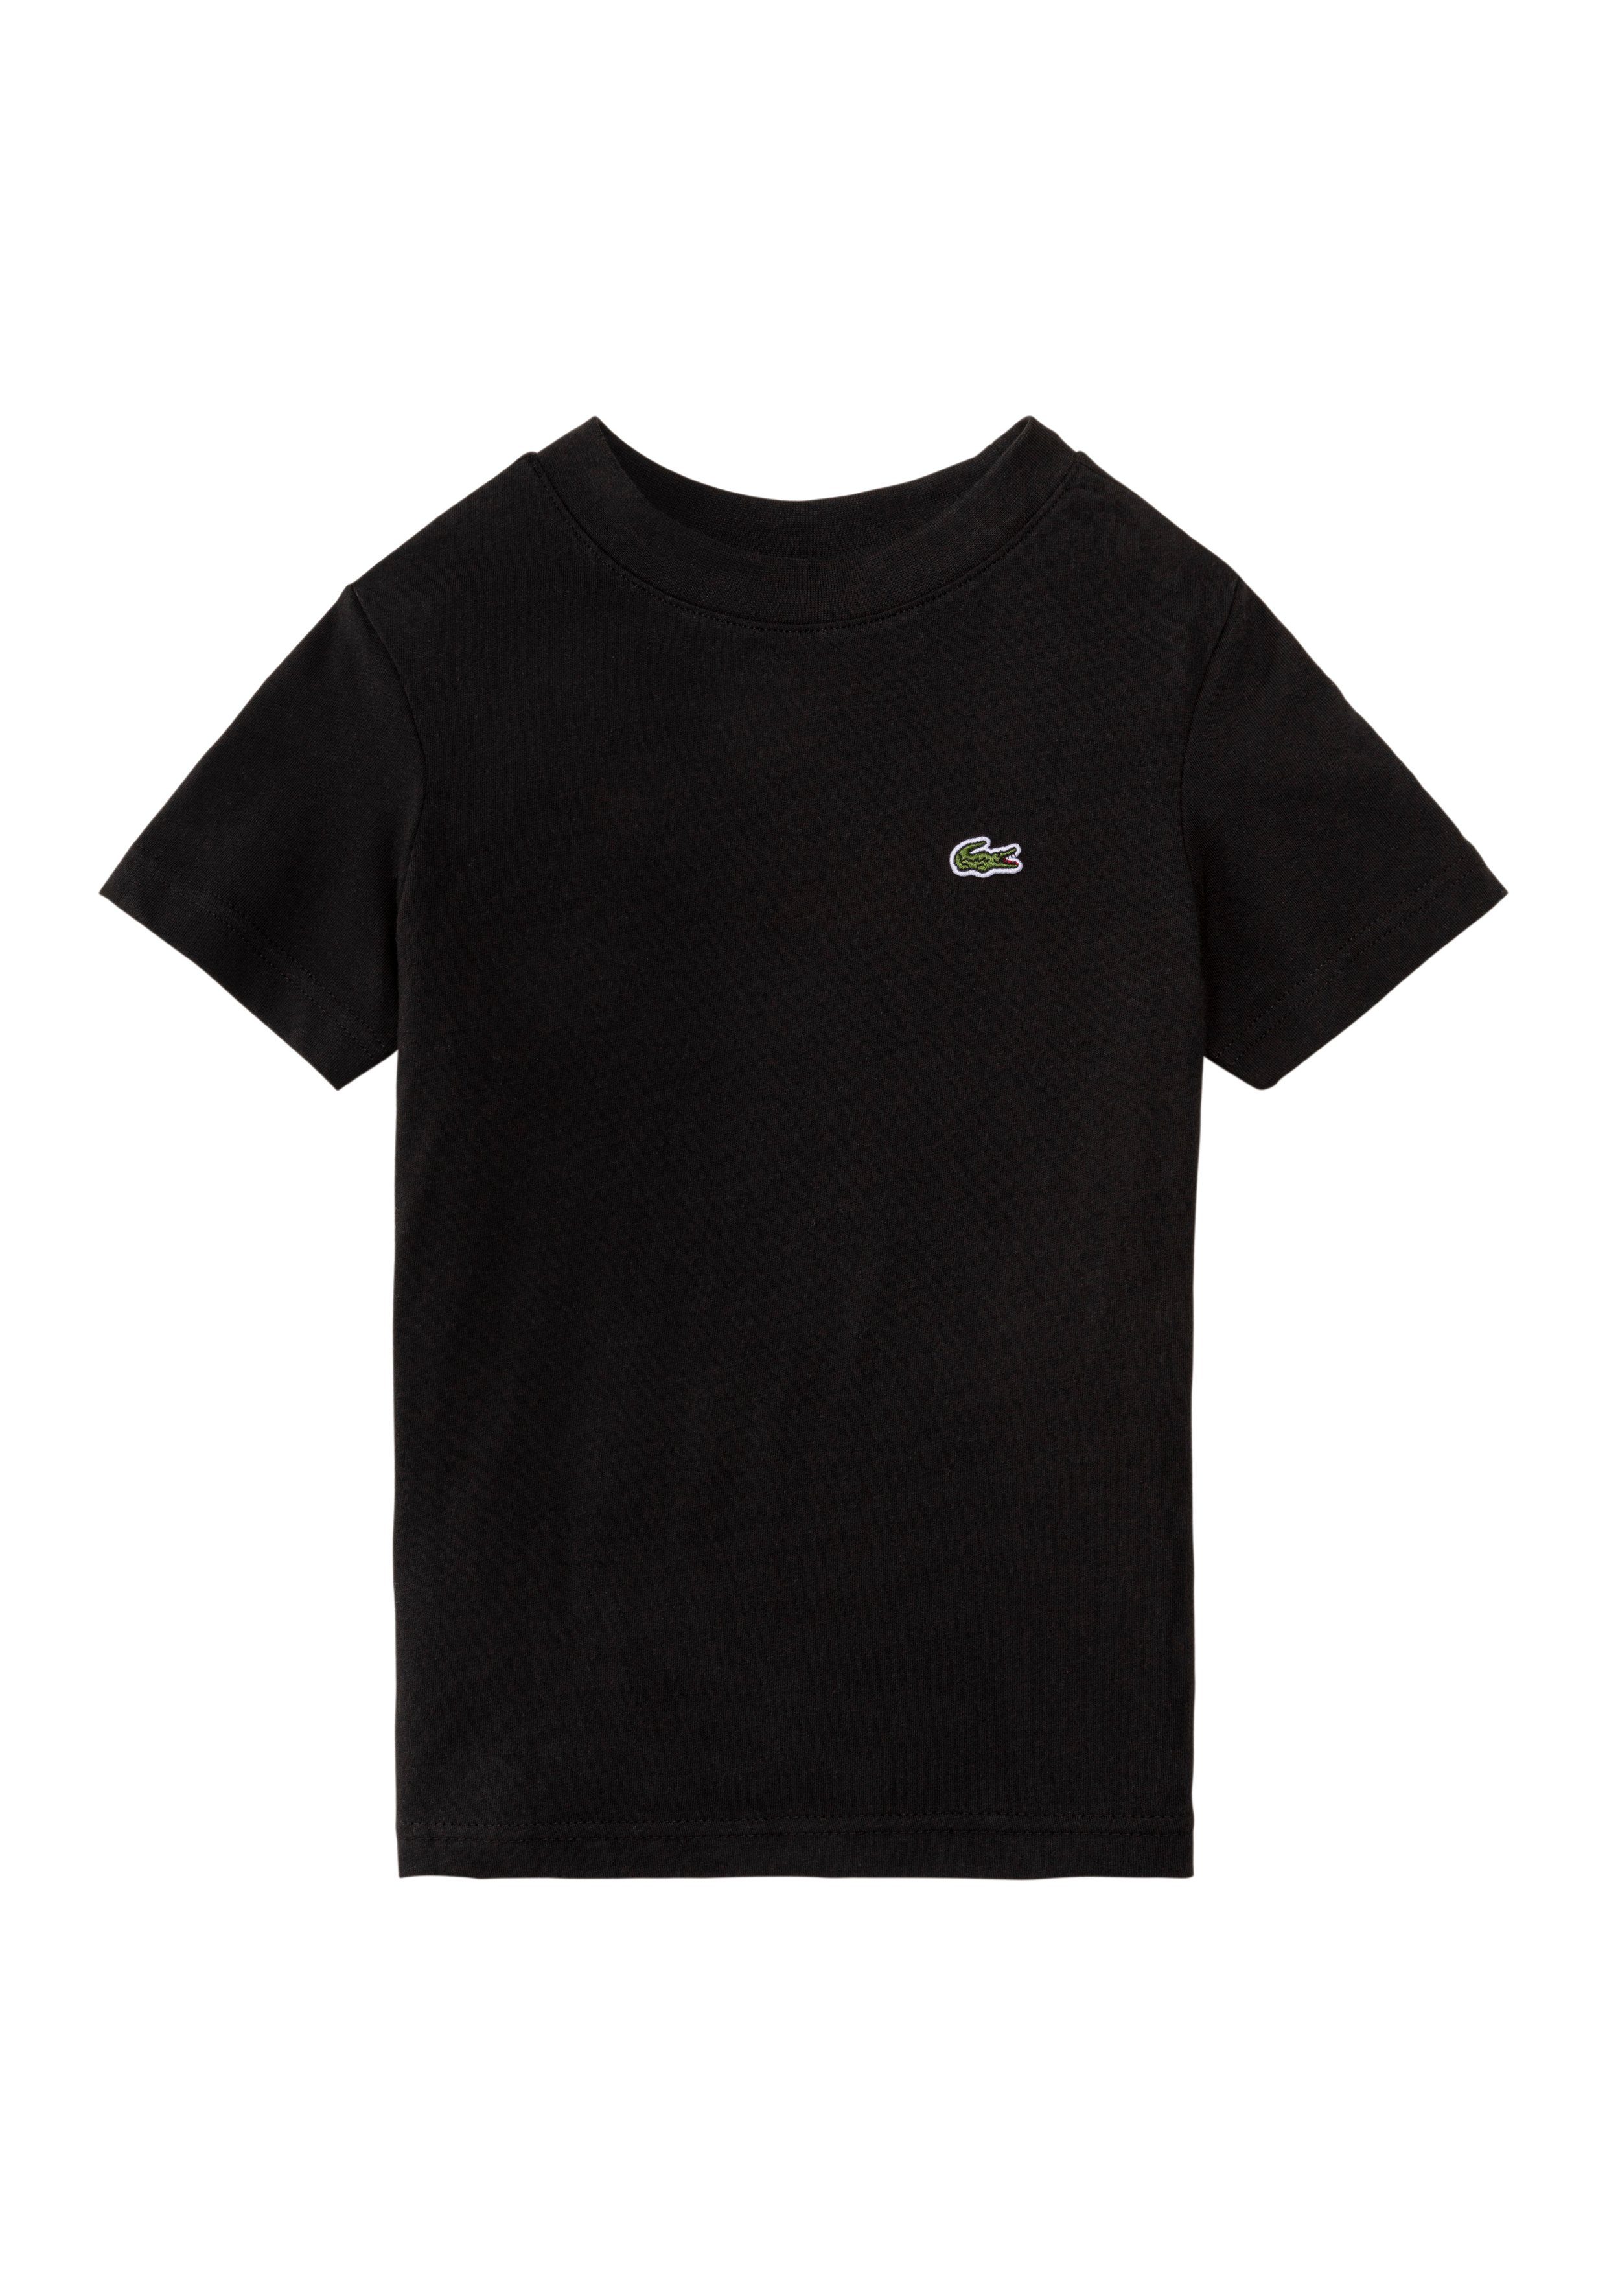 Lacoste T-Shirt mit Lacoste-Krokodil auf schwarz Brusthöhe